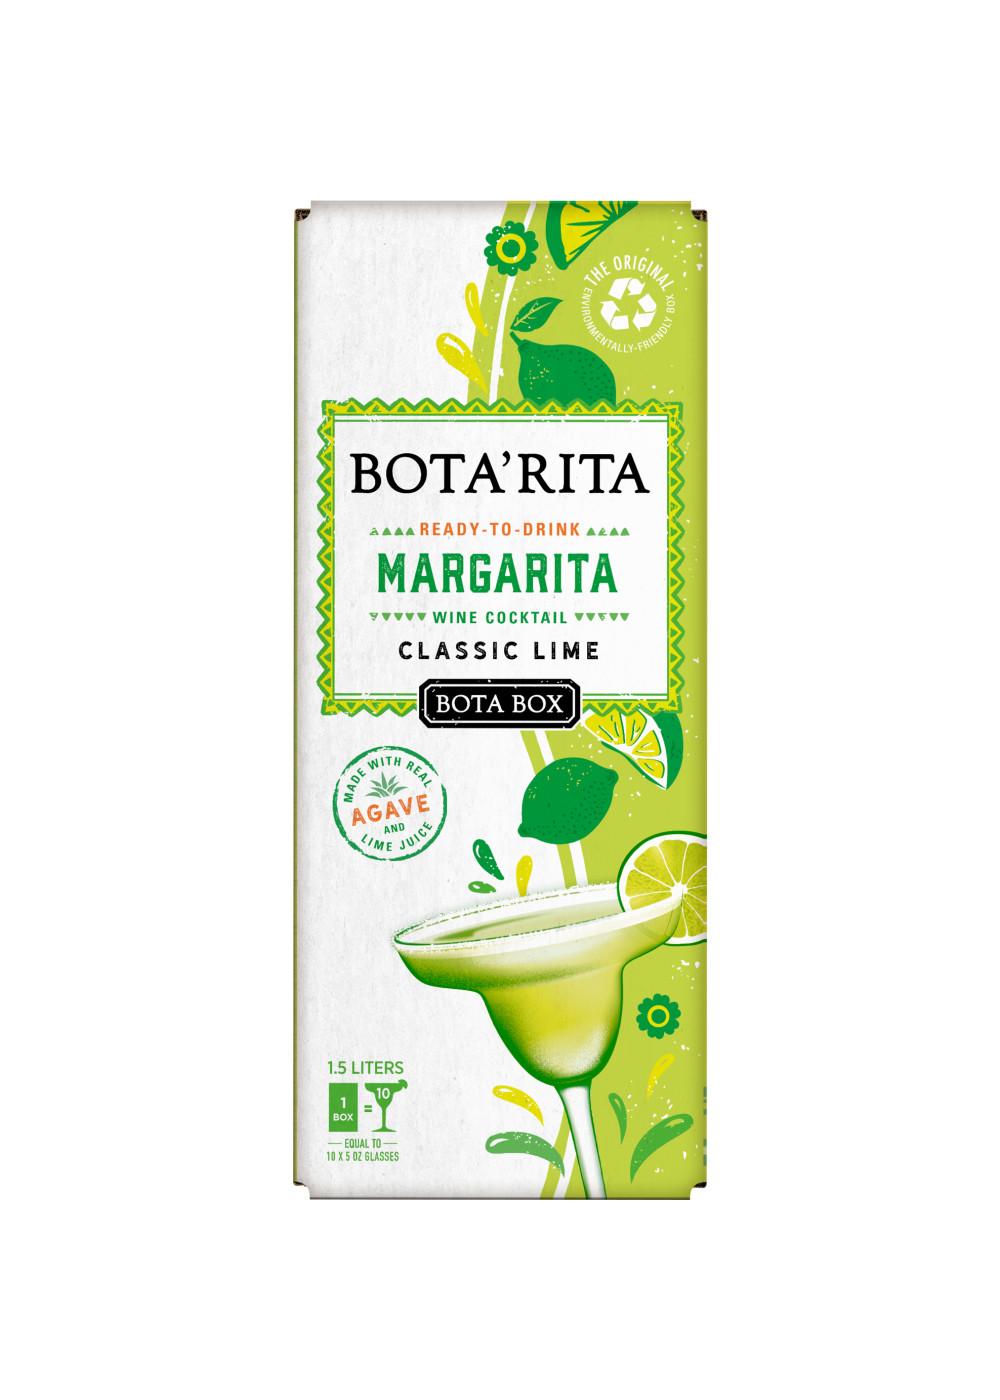 Bota Box Bota'Rita Classic Lime Margarita Wine Cocktail; image 1 of 4